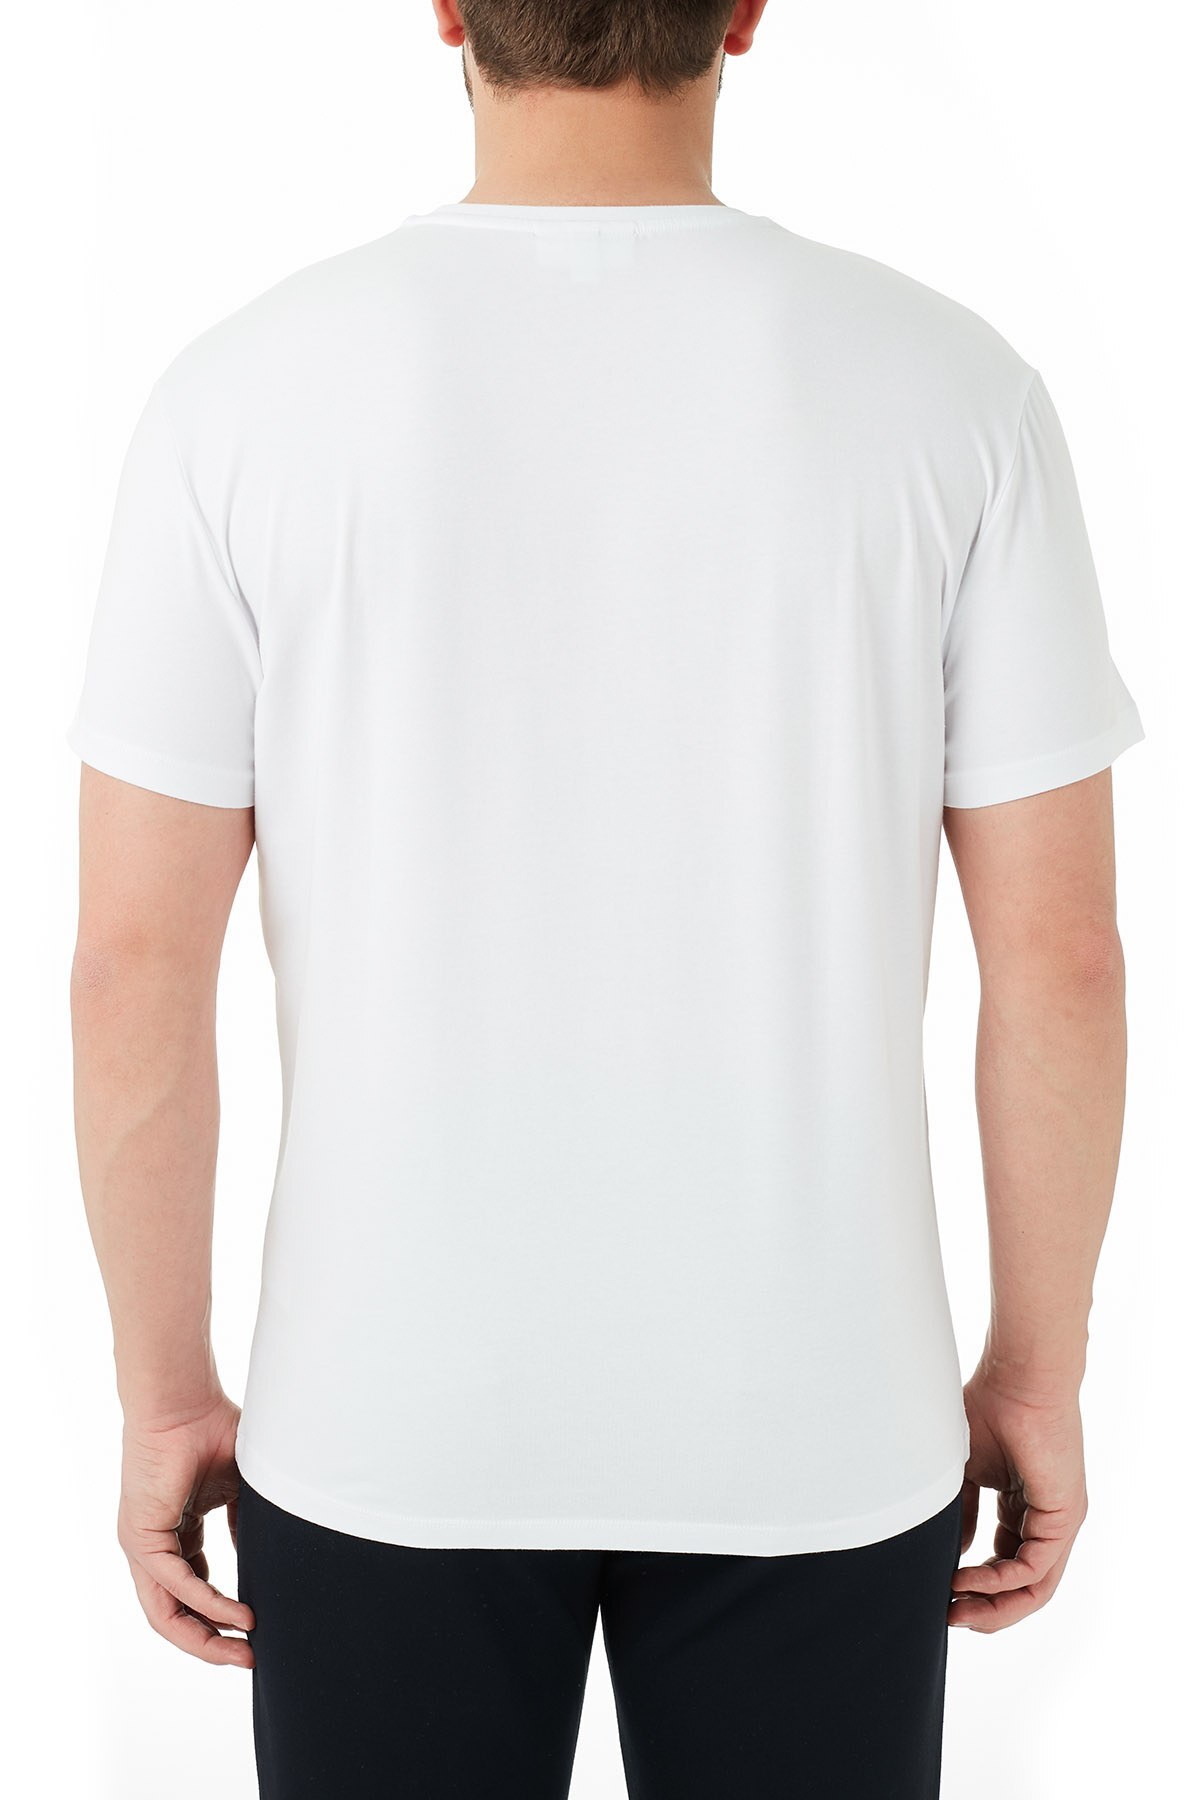 Lacoste Erkek T Shirt TH0112 12B BEYAZ-MAVİ